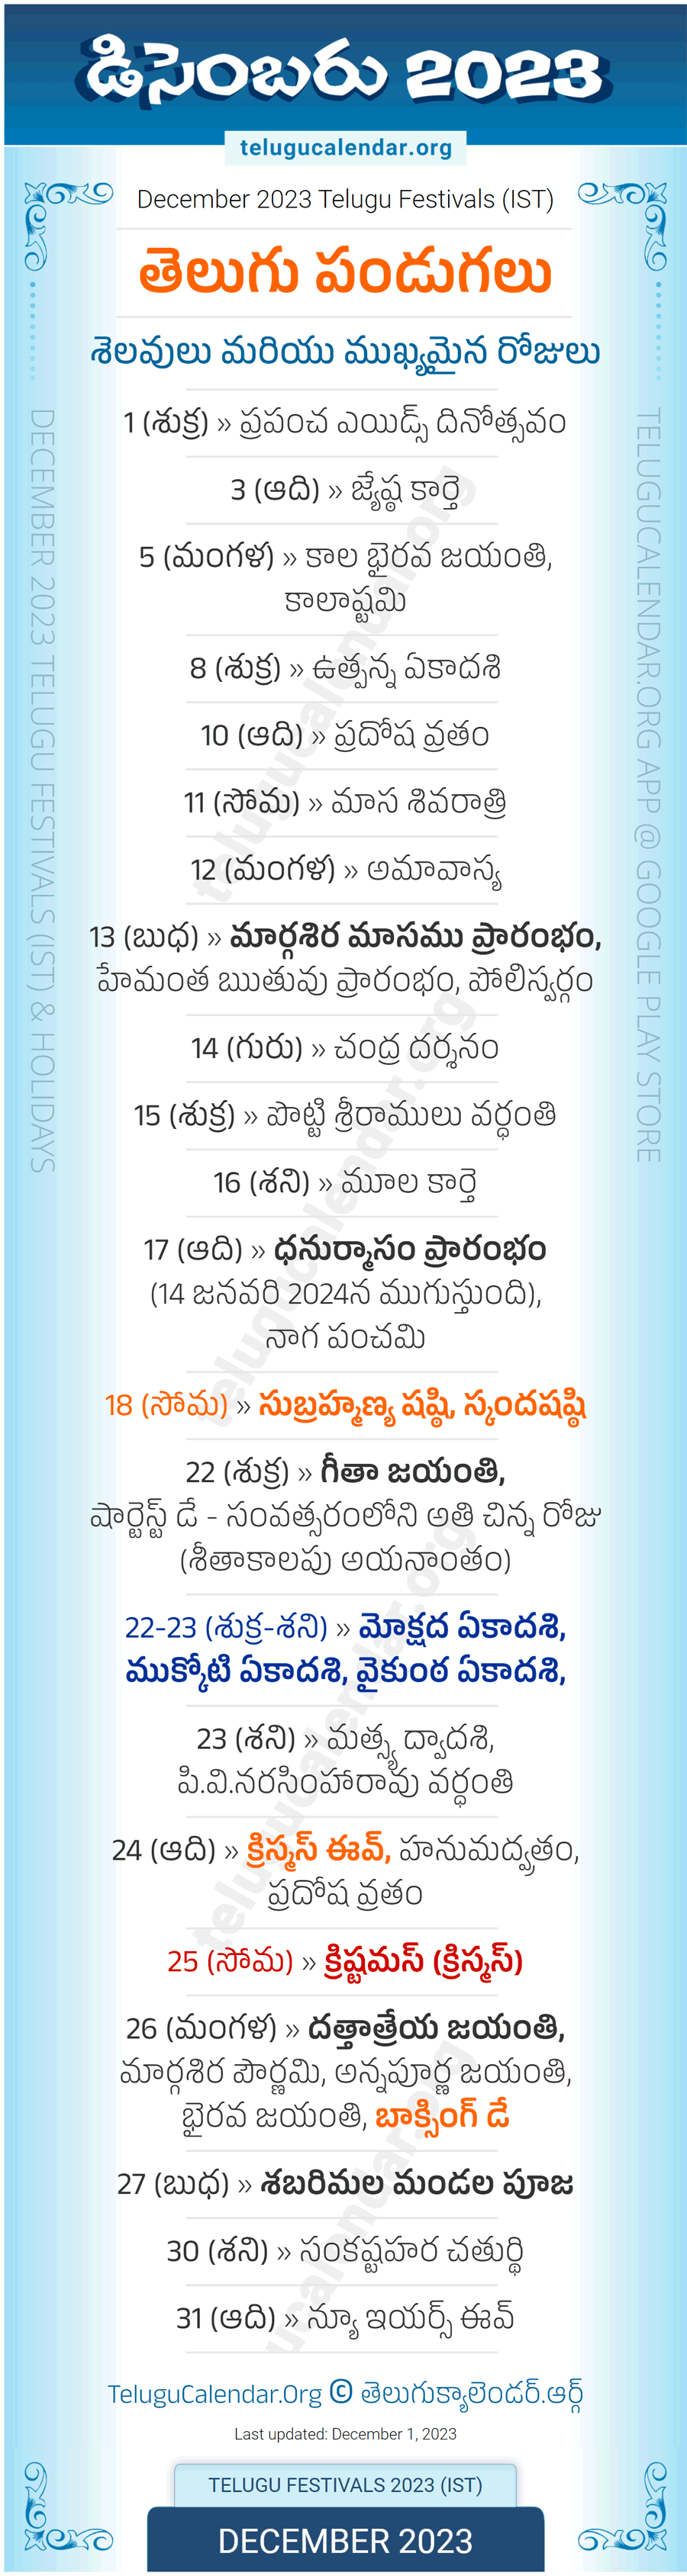 Telugu Festivals 2023 December